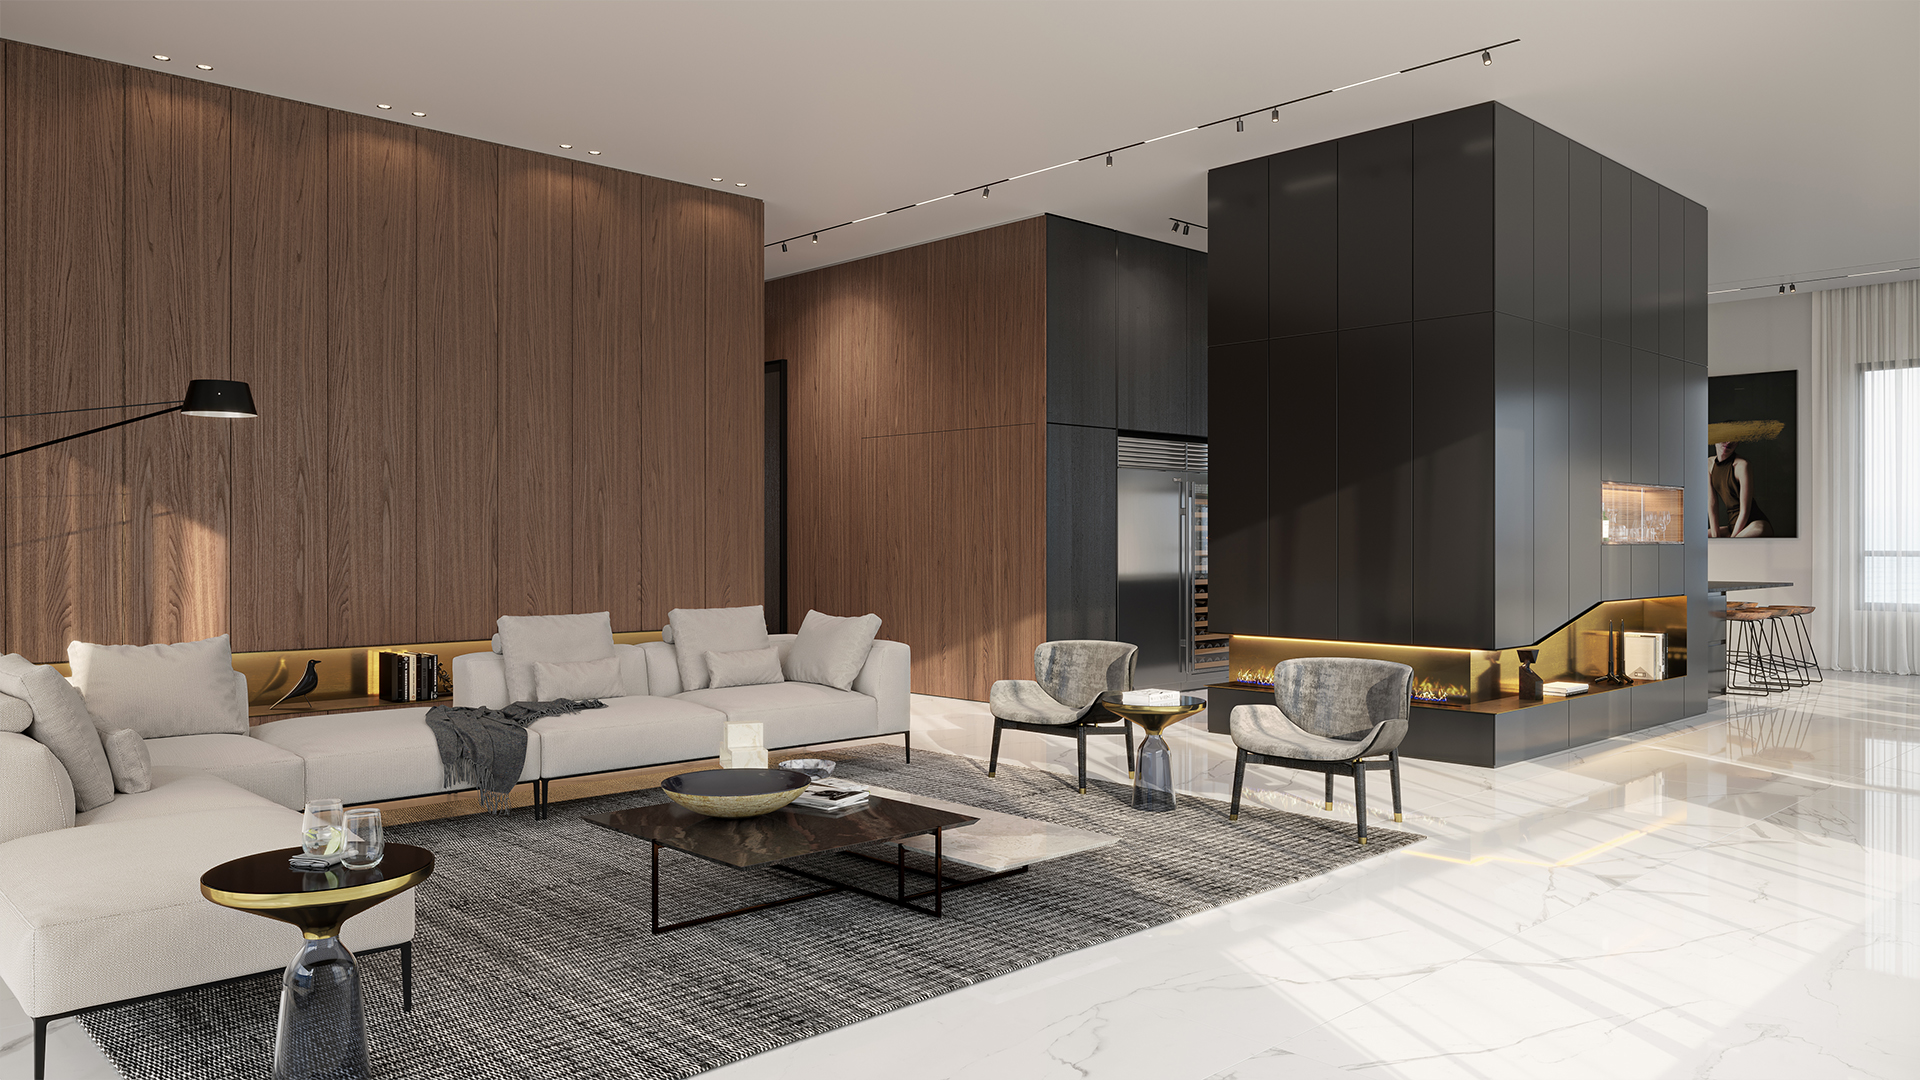 Maayan-Golan_Architectural-Visualization_interior-visualization_penthouse-apartment_livingroom_design-by-elad-ben-nahmias_04